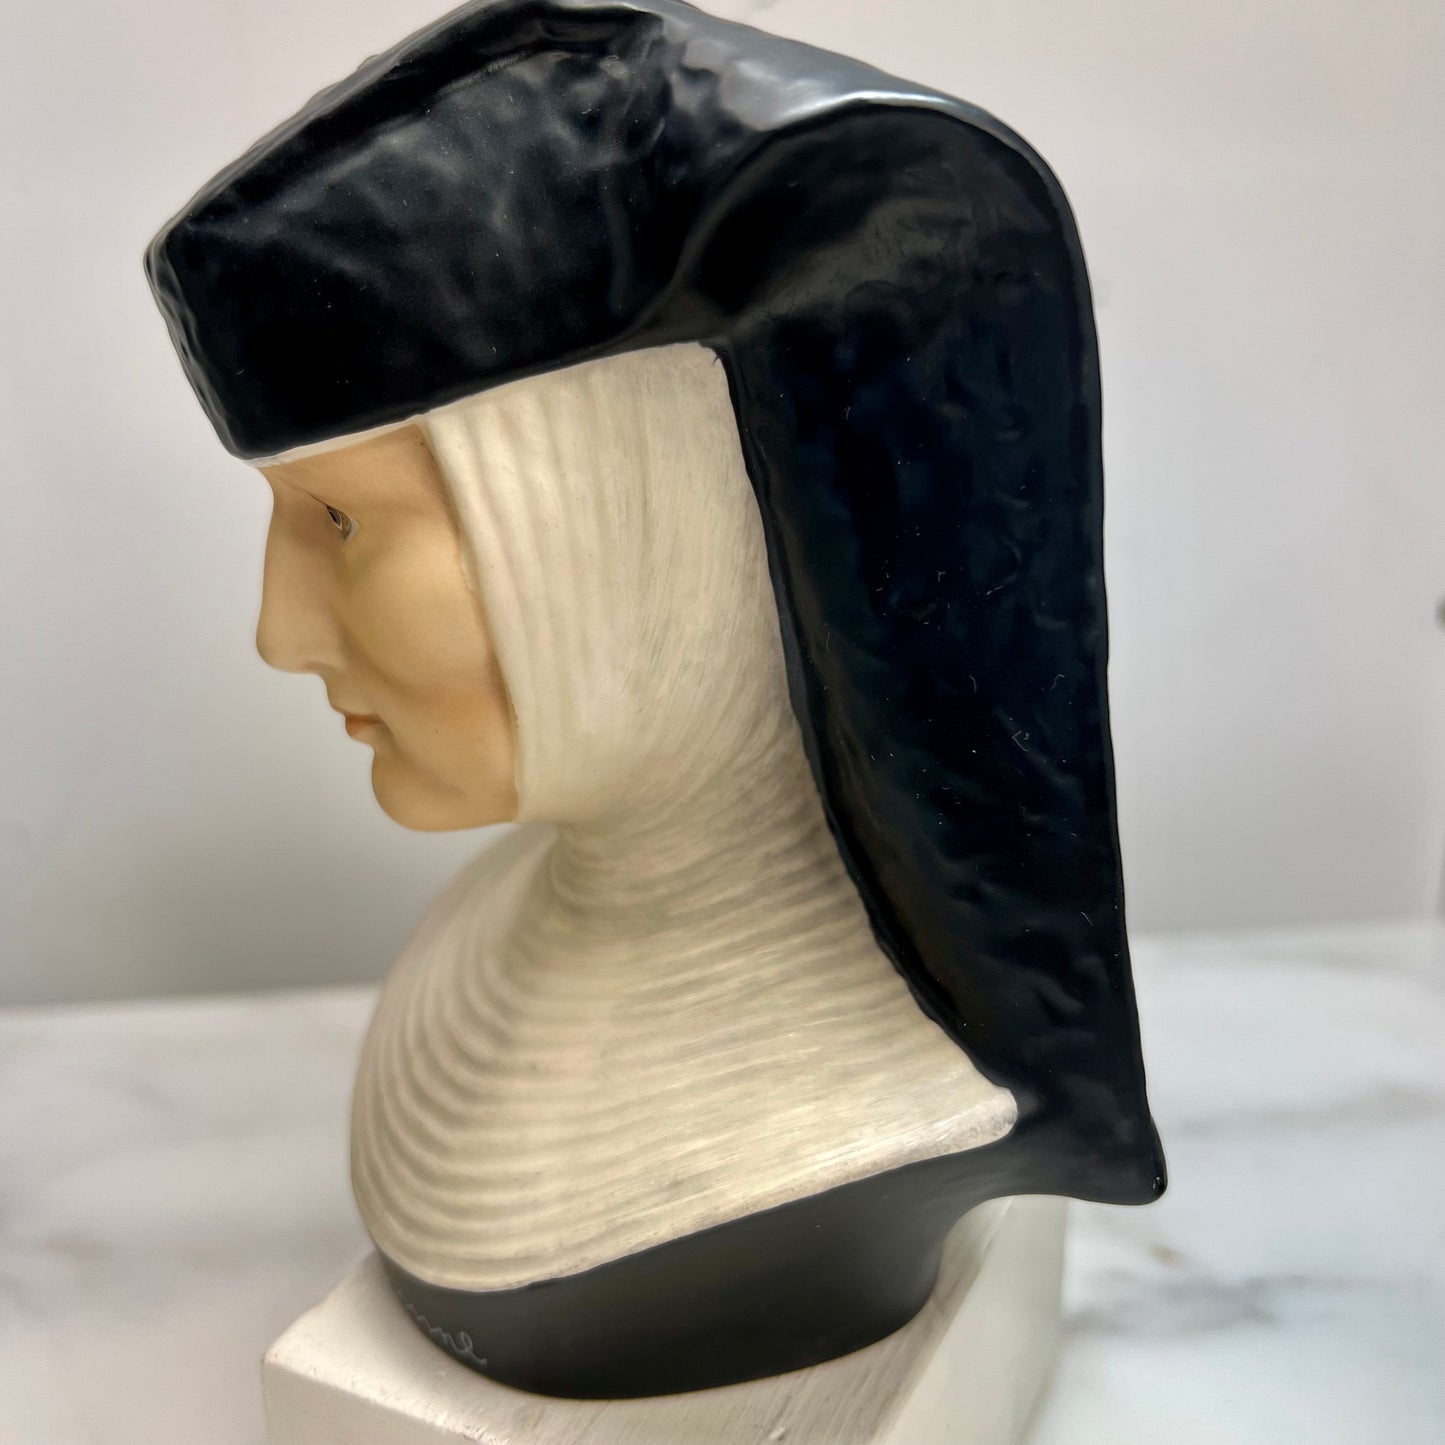 Vintage 1978 Hummel Bust of Sister Maria Innocentia Hummel